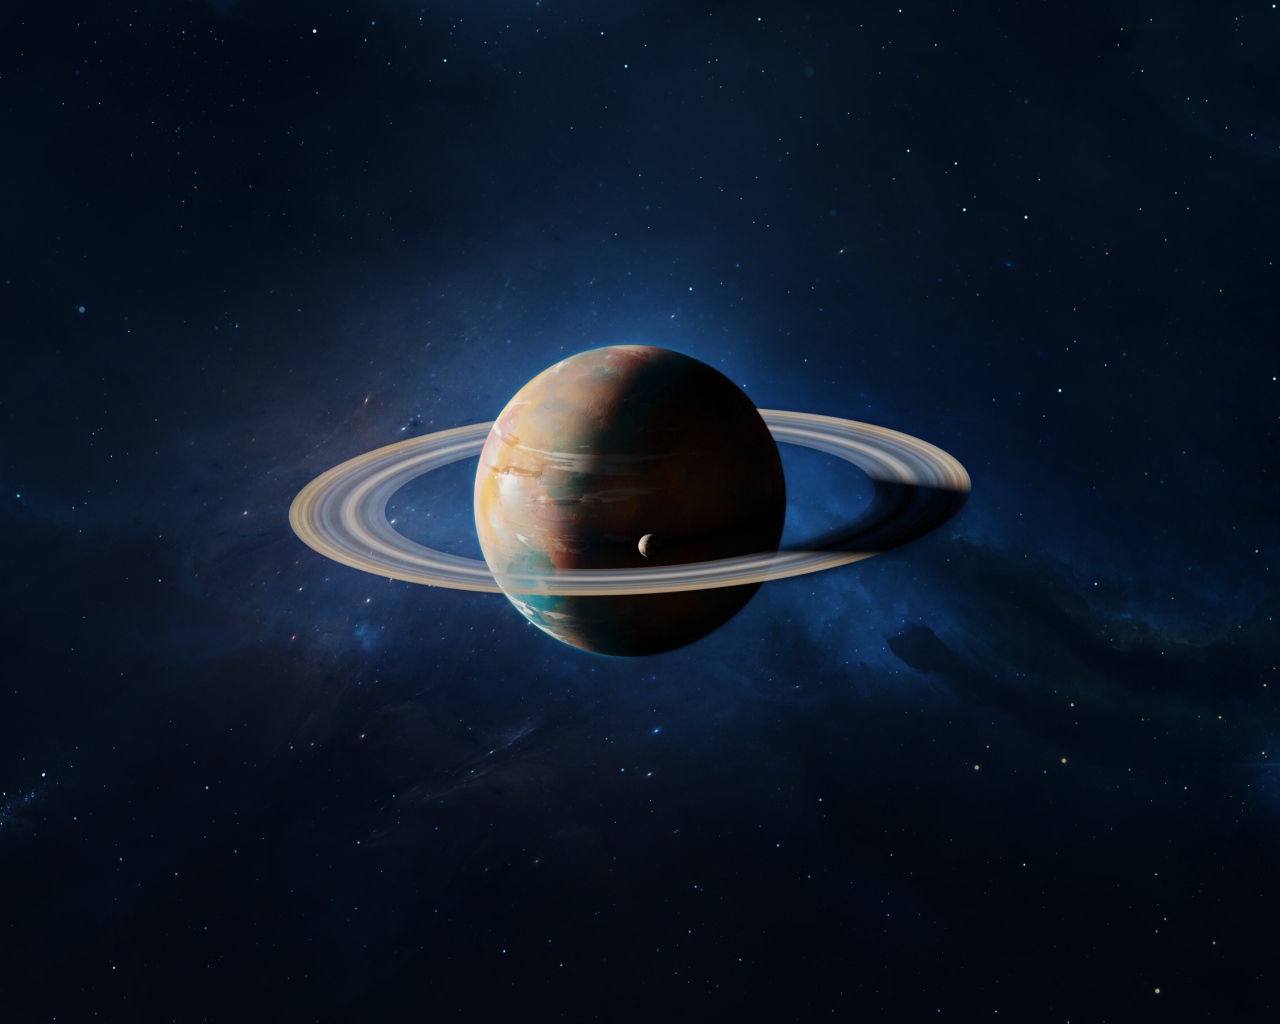 Saturn big planet in blue space